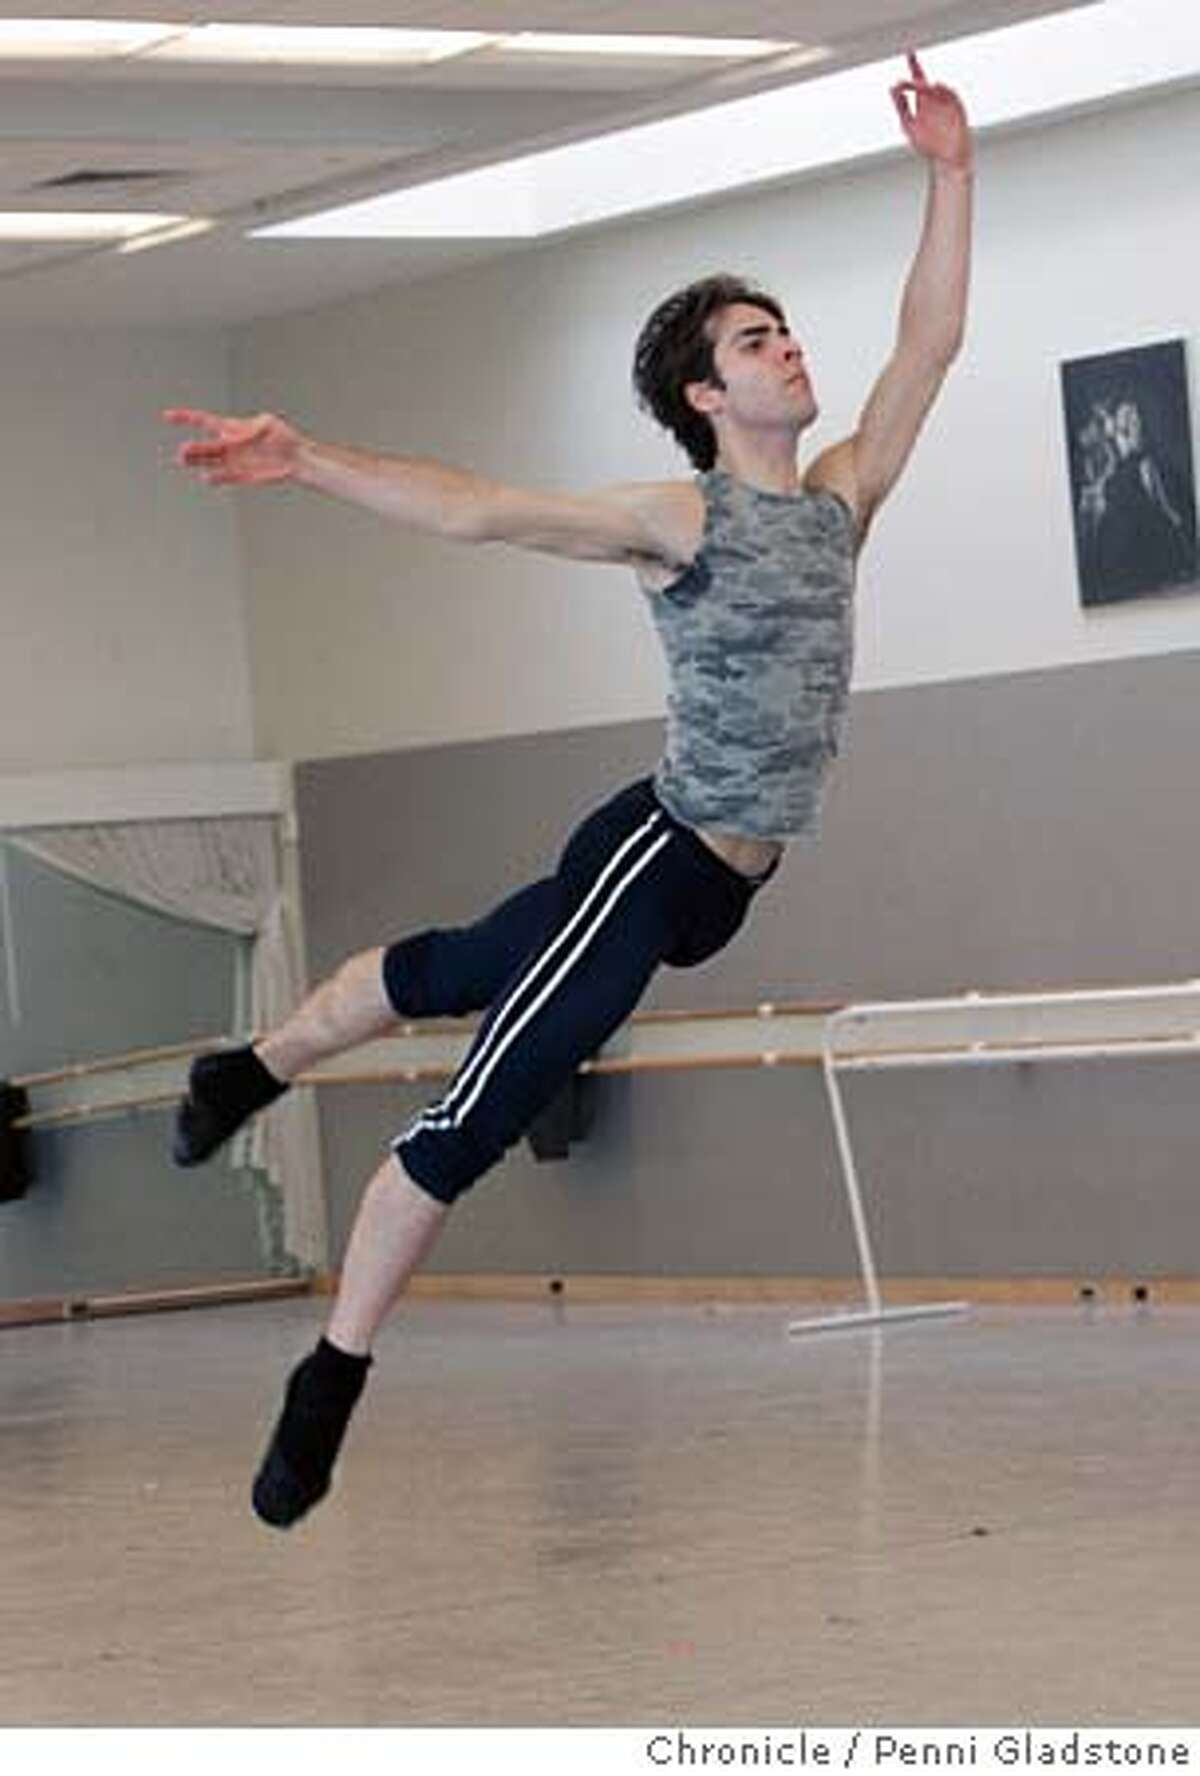 GARCIA 052PG.JPG gonzalo garcia - hot rising young ballet star, in rehearsal. The San Francisco Chronicle, Penni Gladstone Photo taken on 2/9/05, in San Francisco,